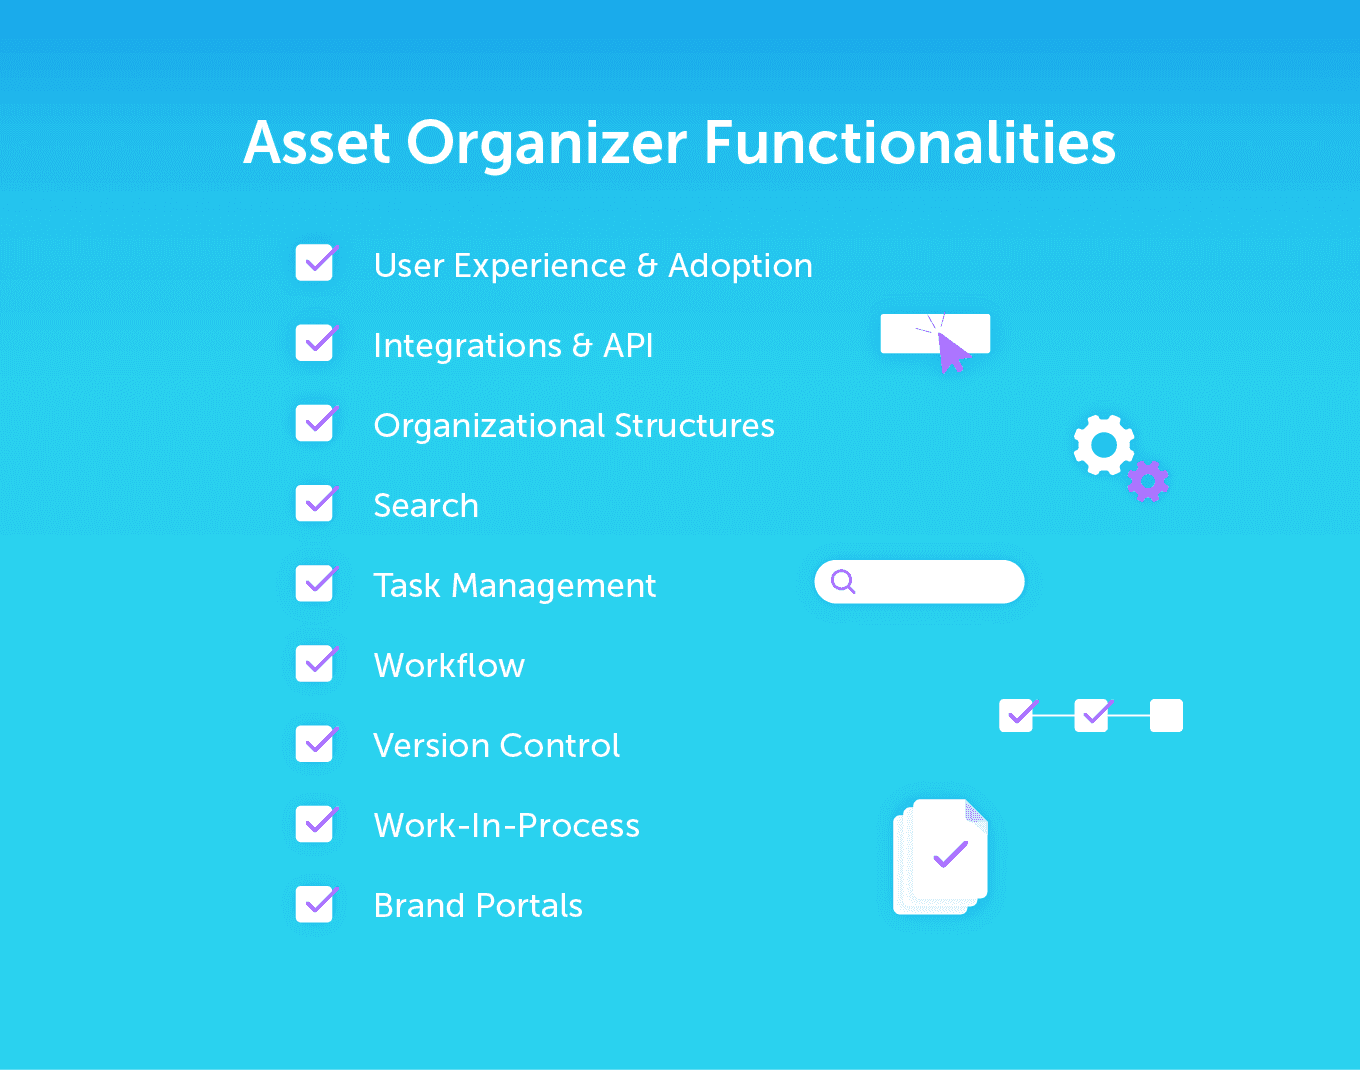 List of Asset Organizer Functionalities